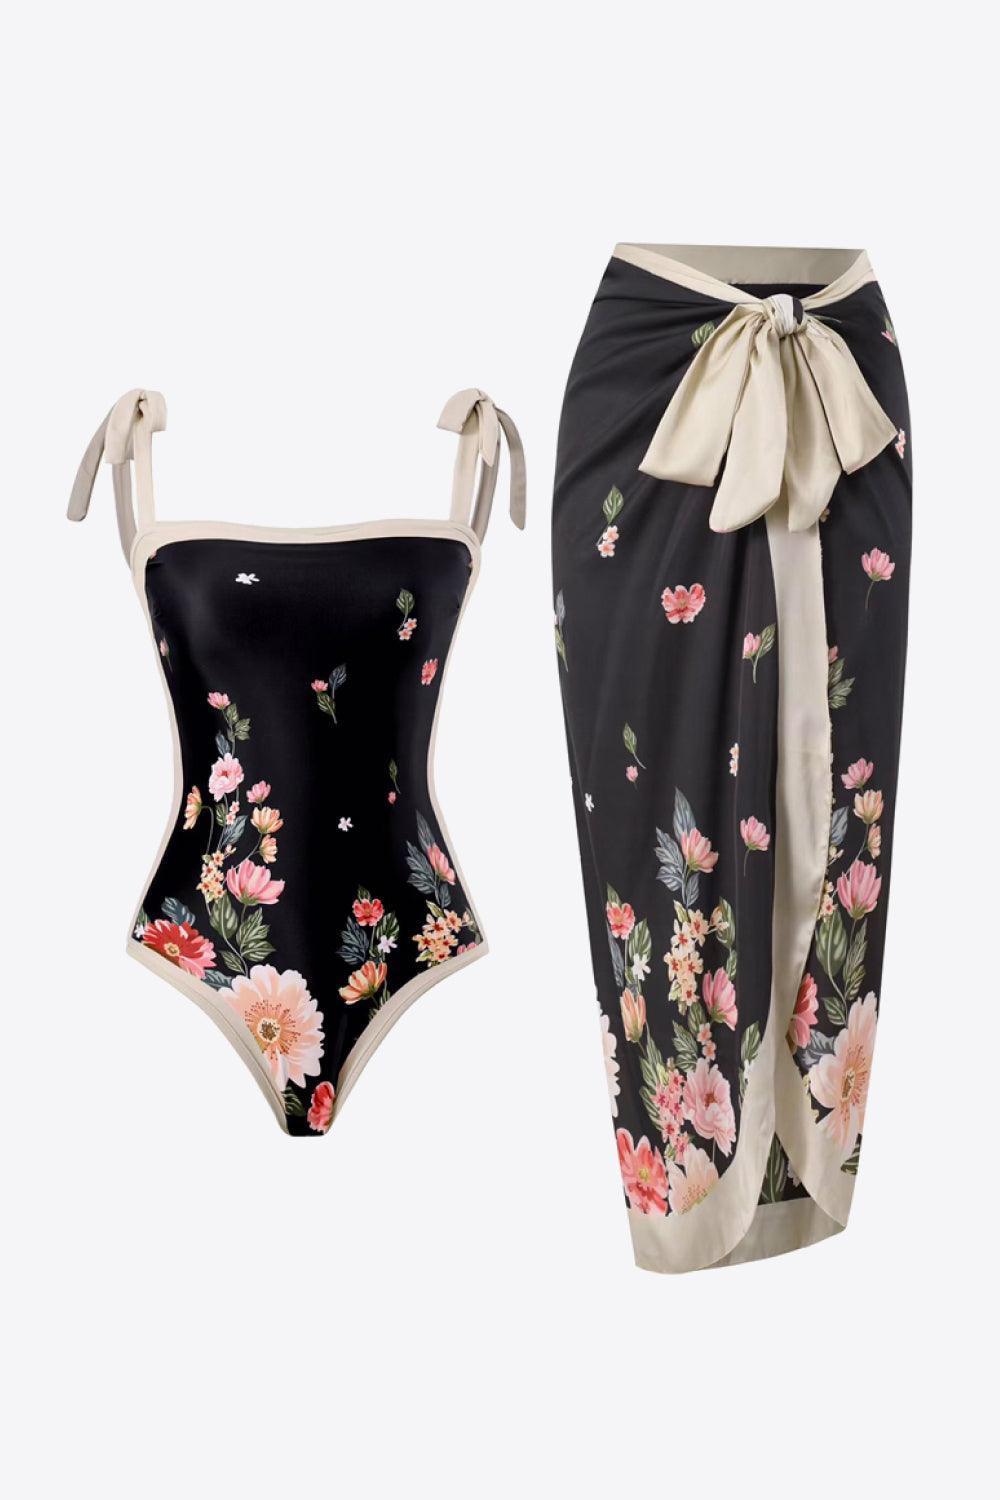 Floral Tie-Shoulder Skirted Two Piece Swimsuit - MXSTUDIO.COM